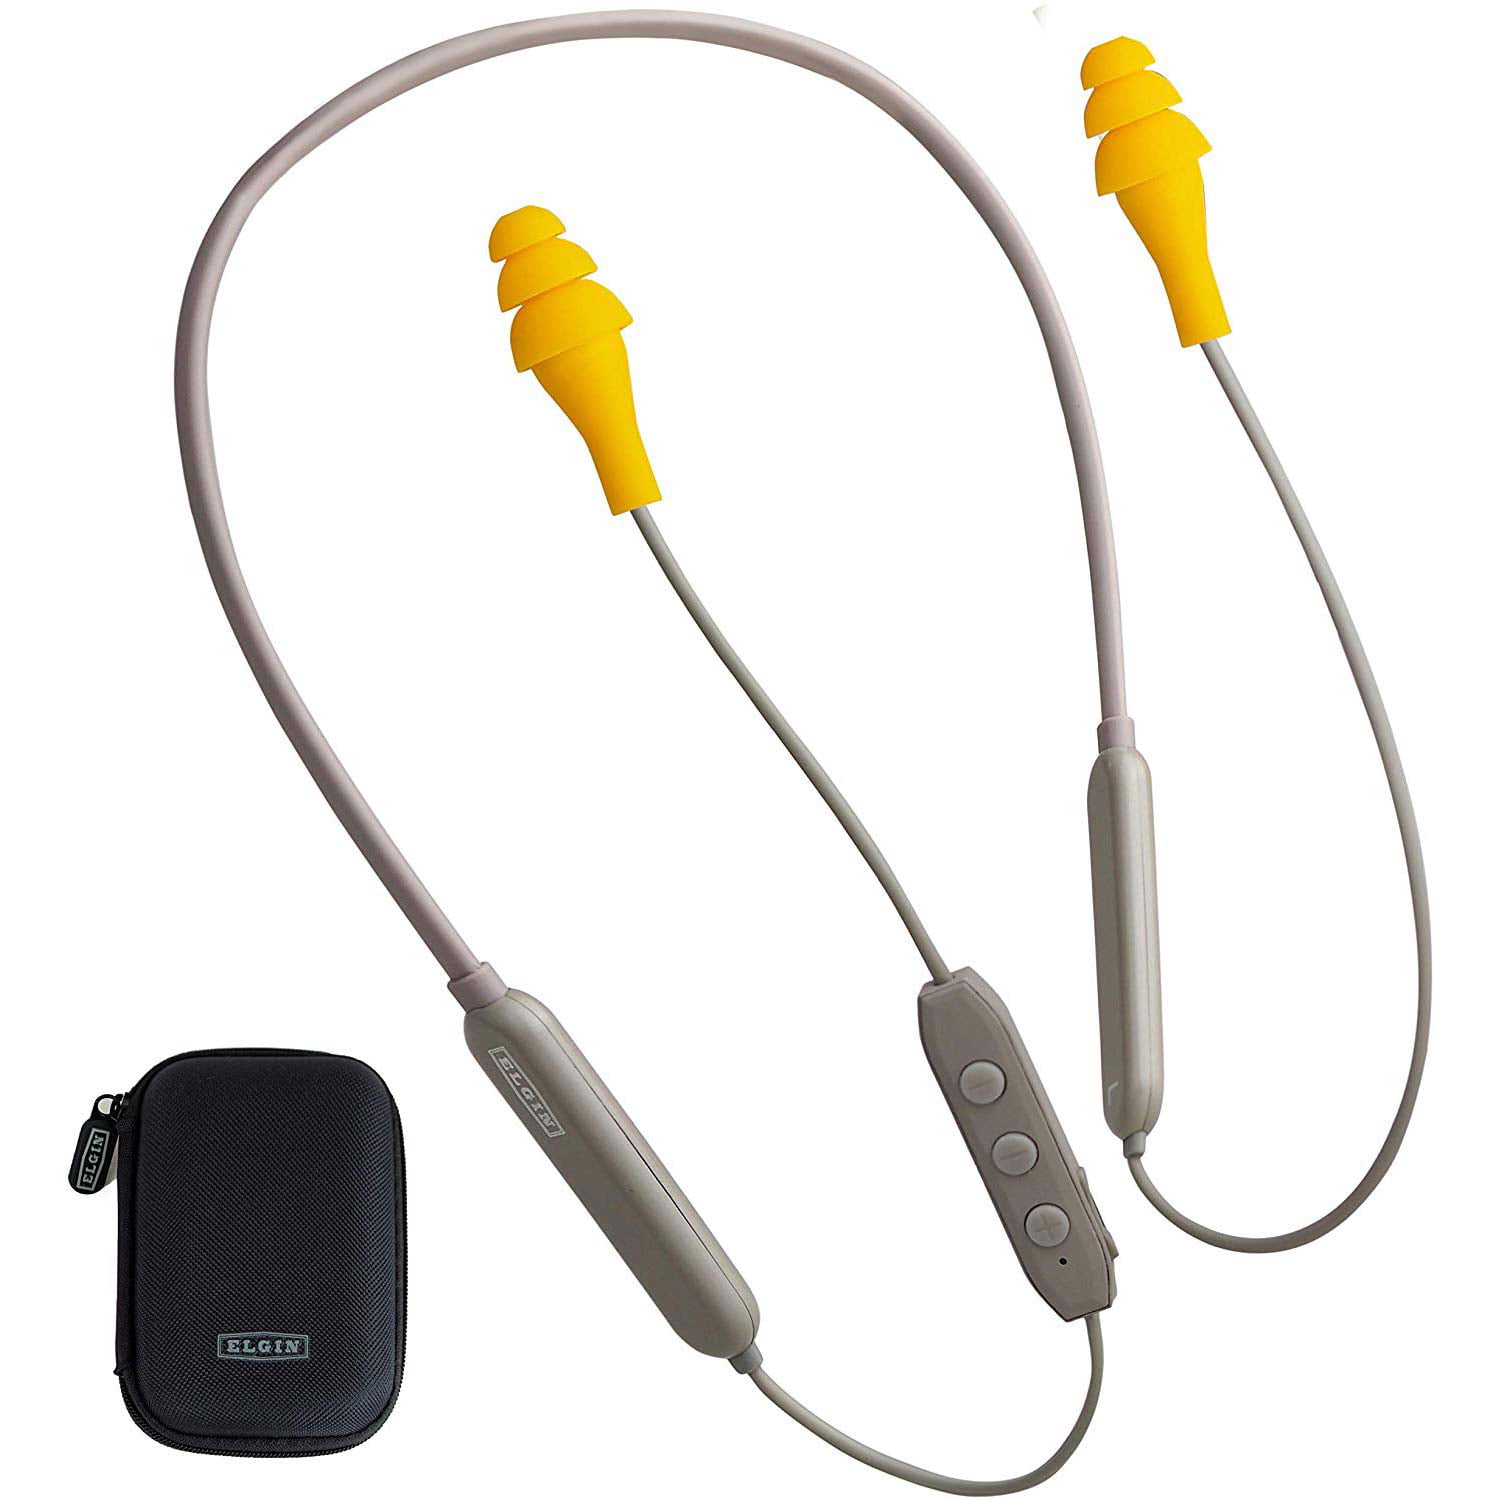 26 dB NRR Plugfones Liberate 2.0 Wireless Bluetooth Earplugs with Audio 